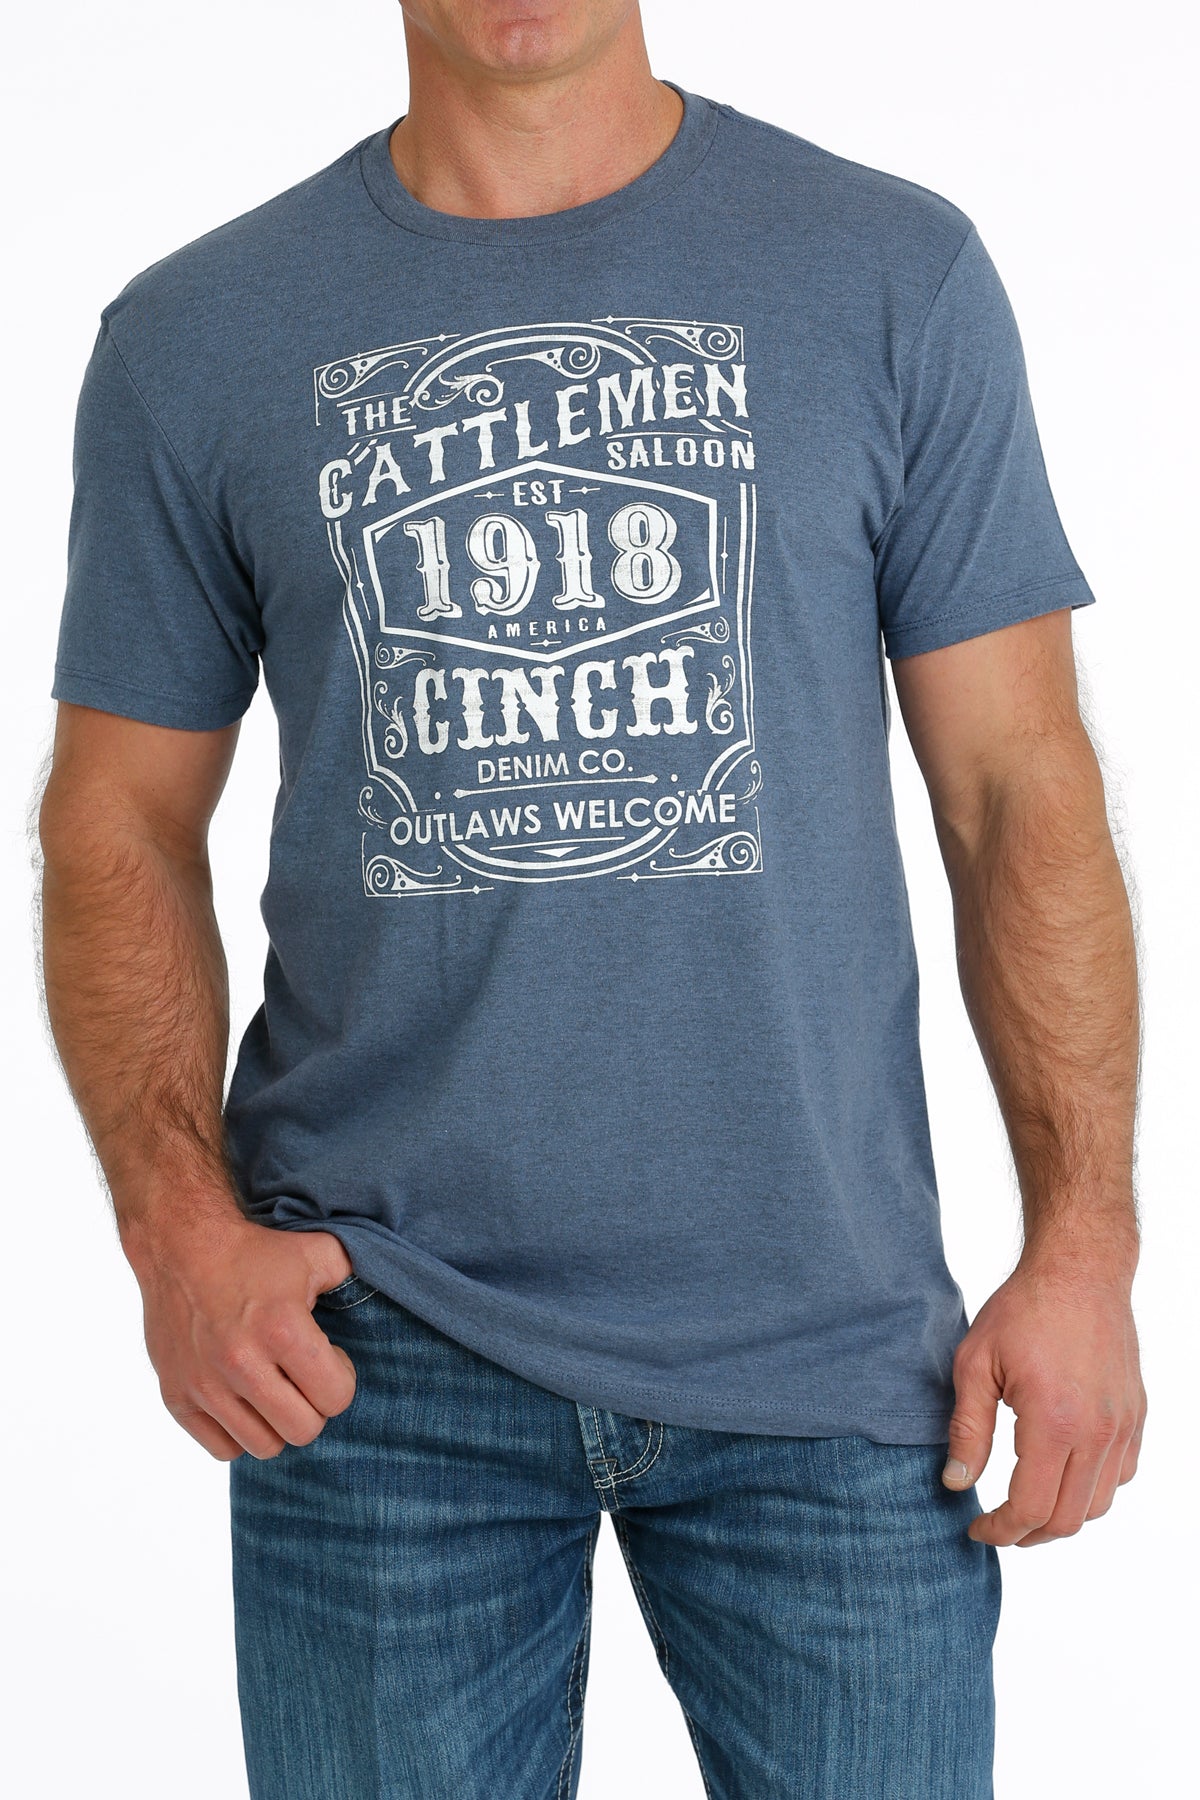 Cinch Men's 'The Cattlemen Saloon' Graphic T-Shirt